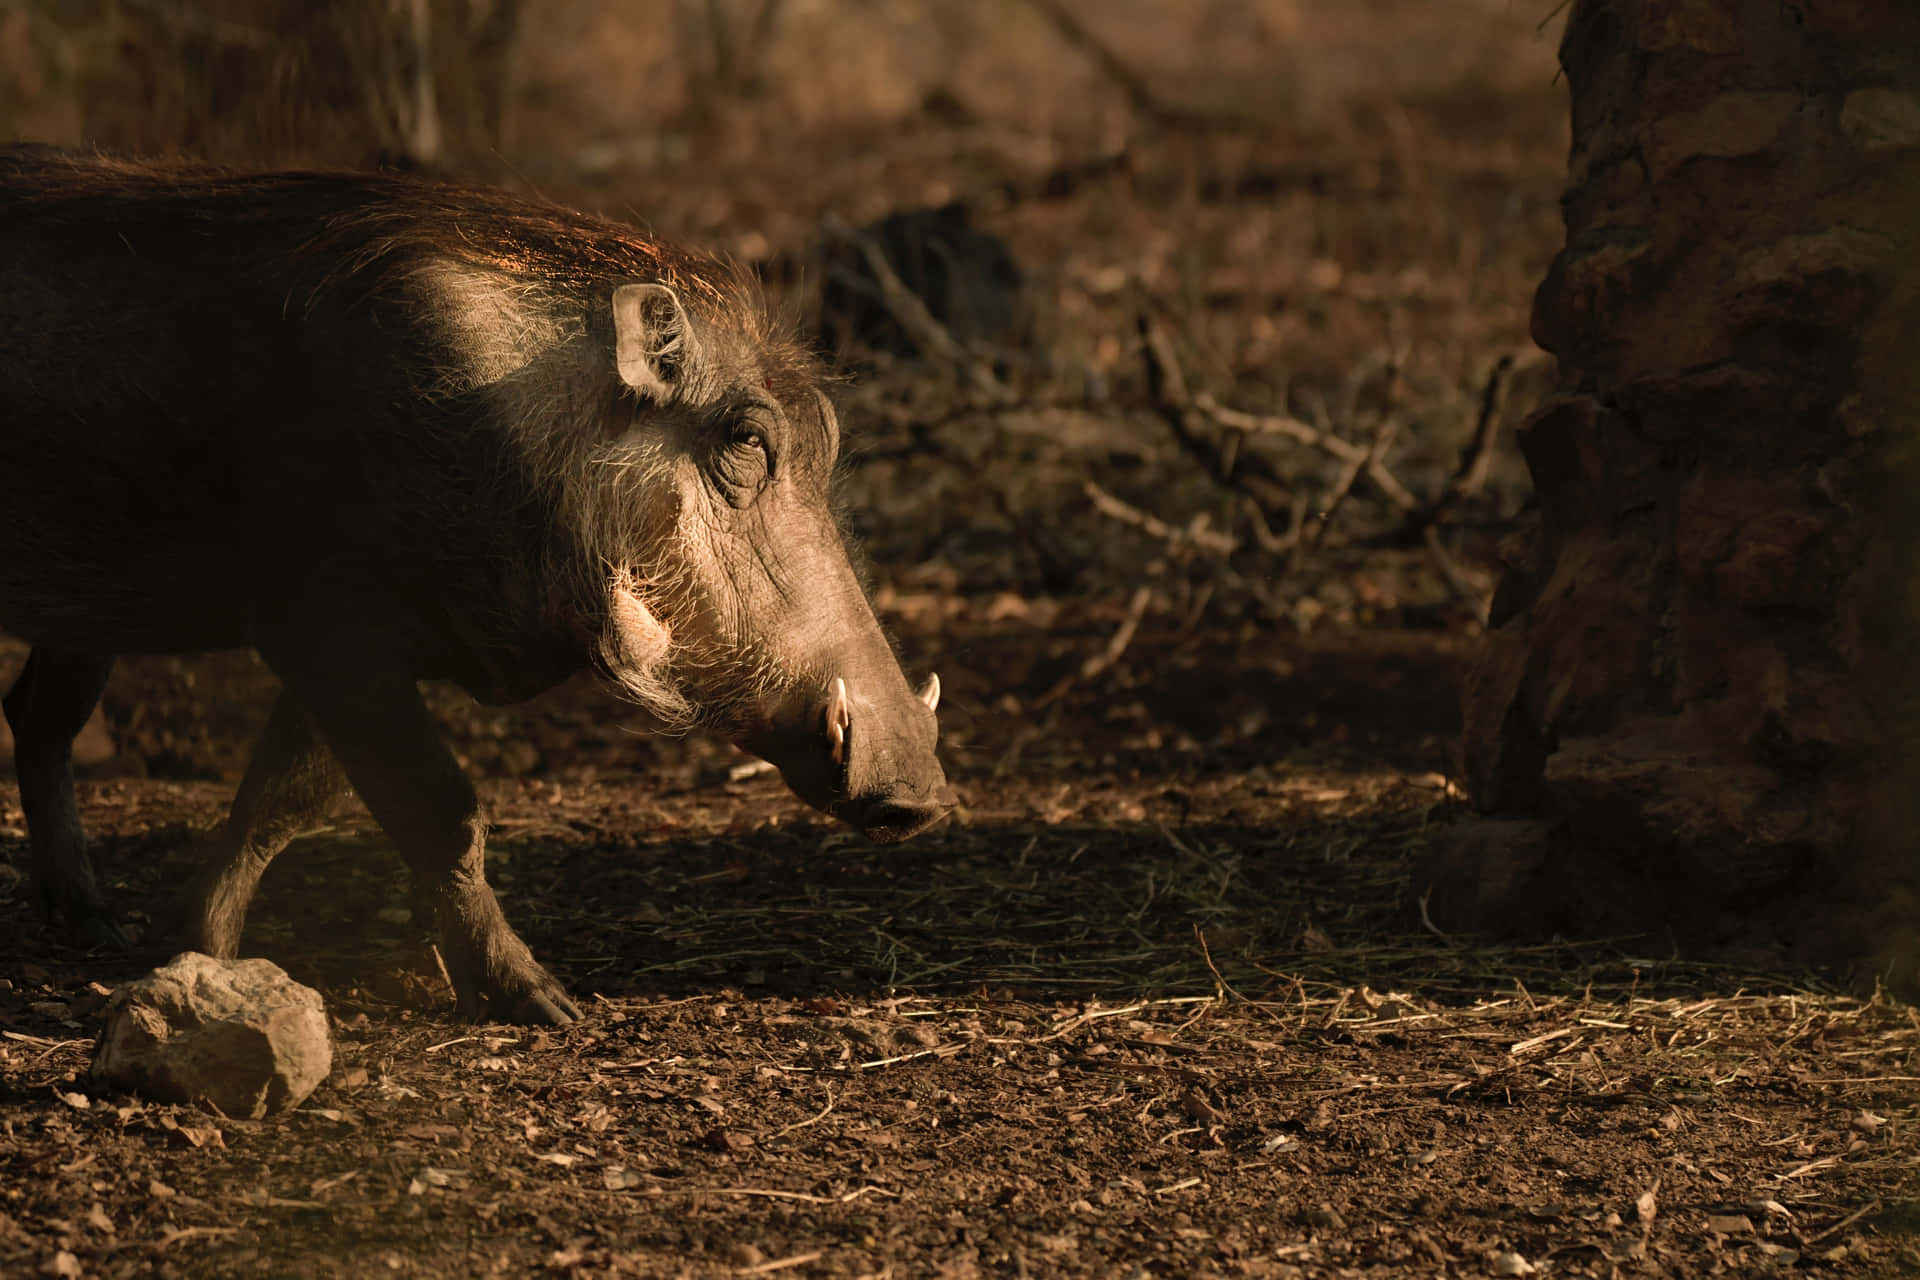 A wild boar roams through a grassy landscape.